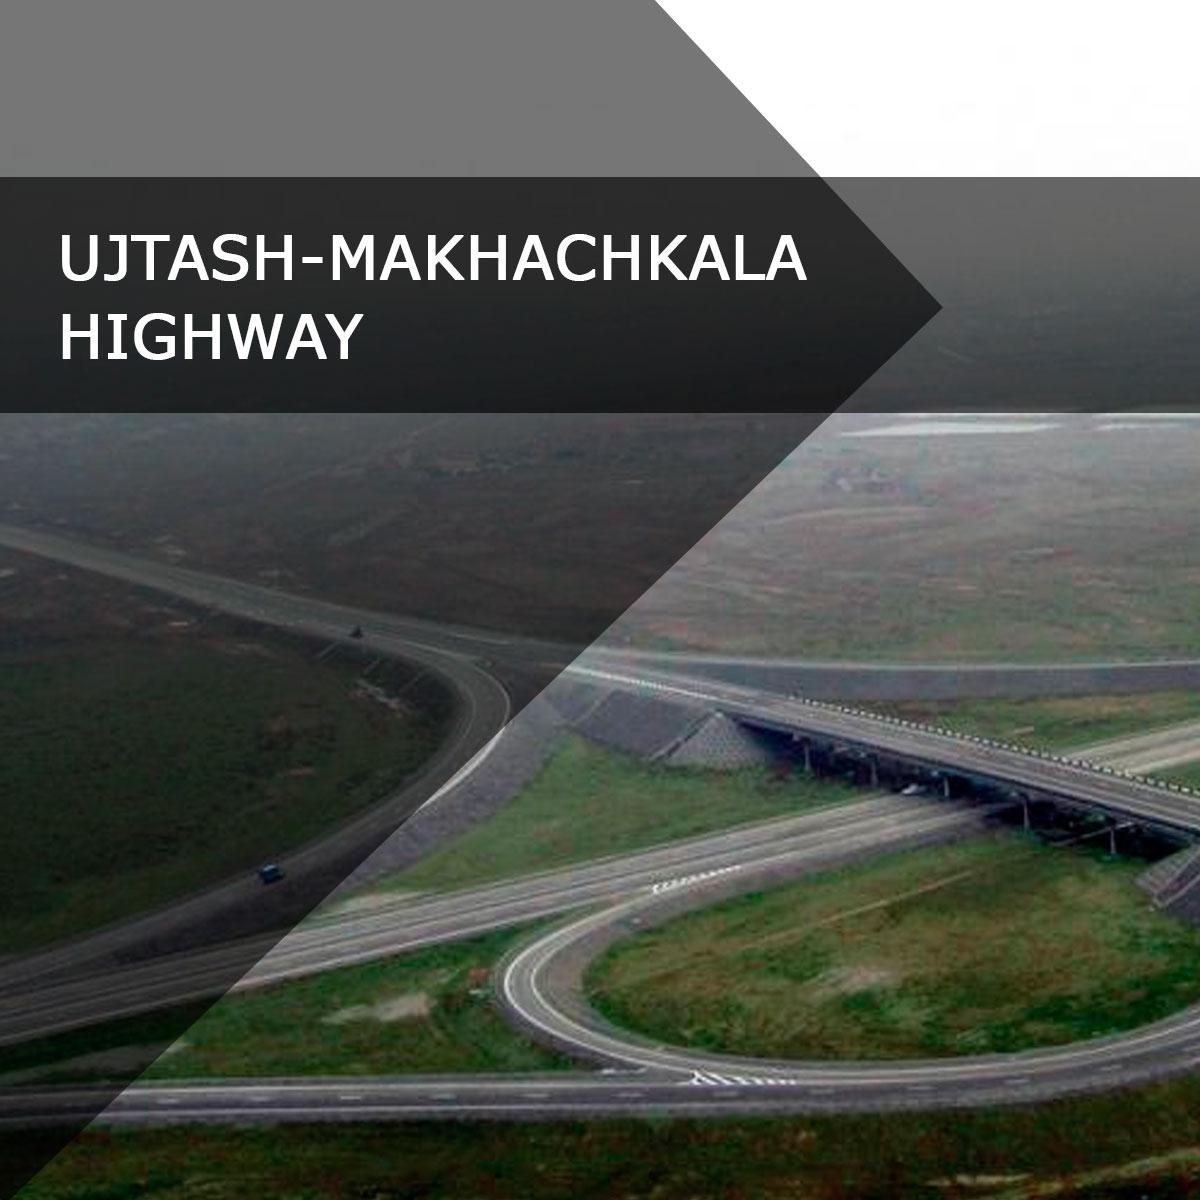 Ujtash-Makhachkala Highway